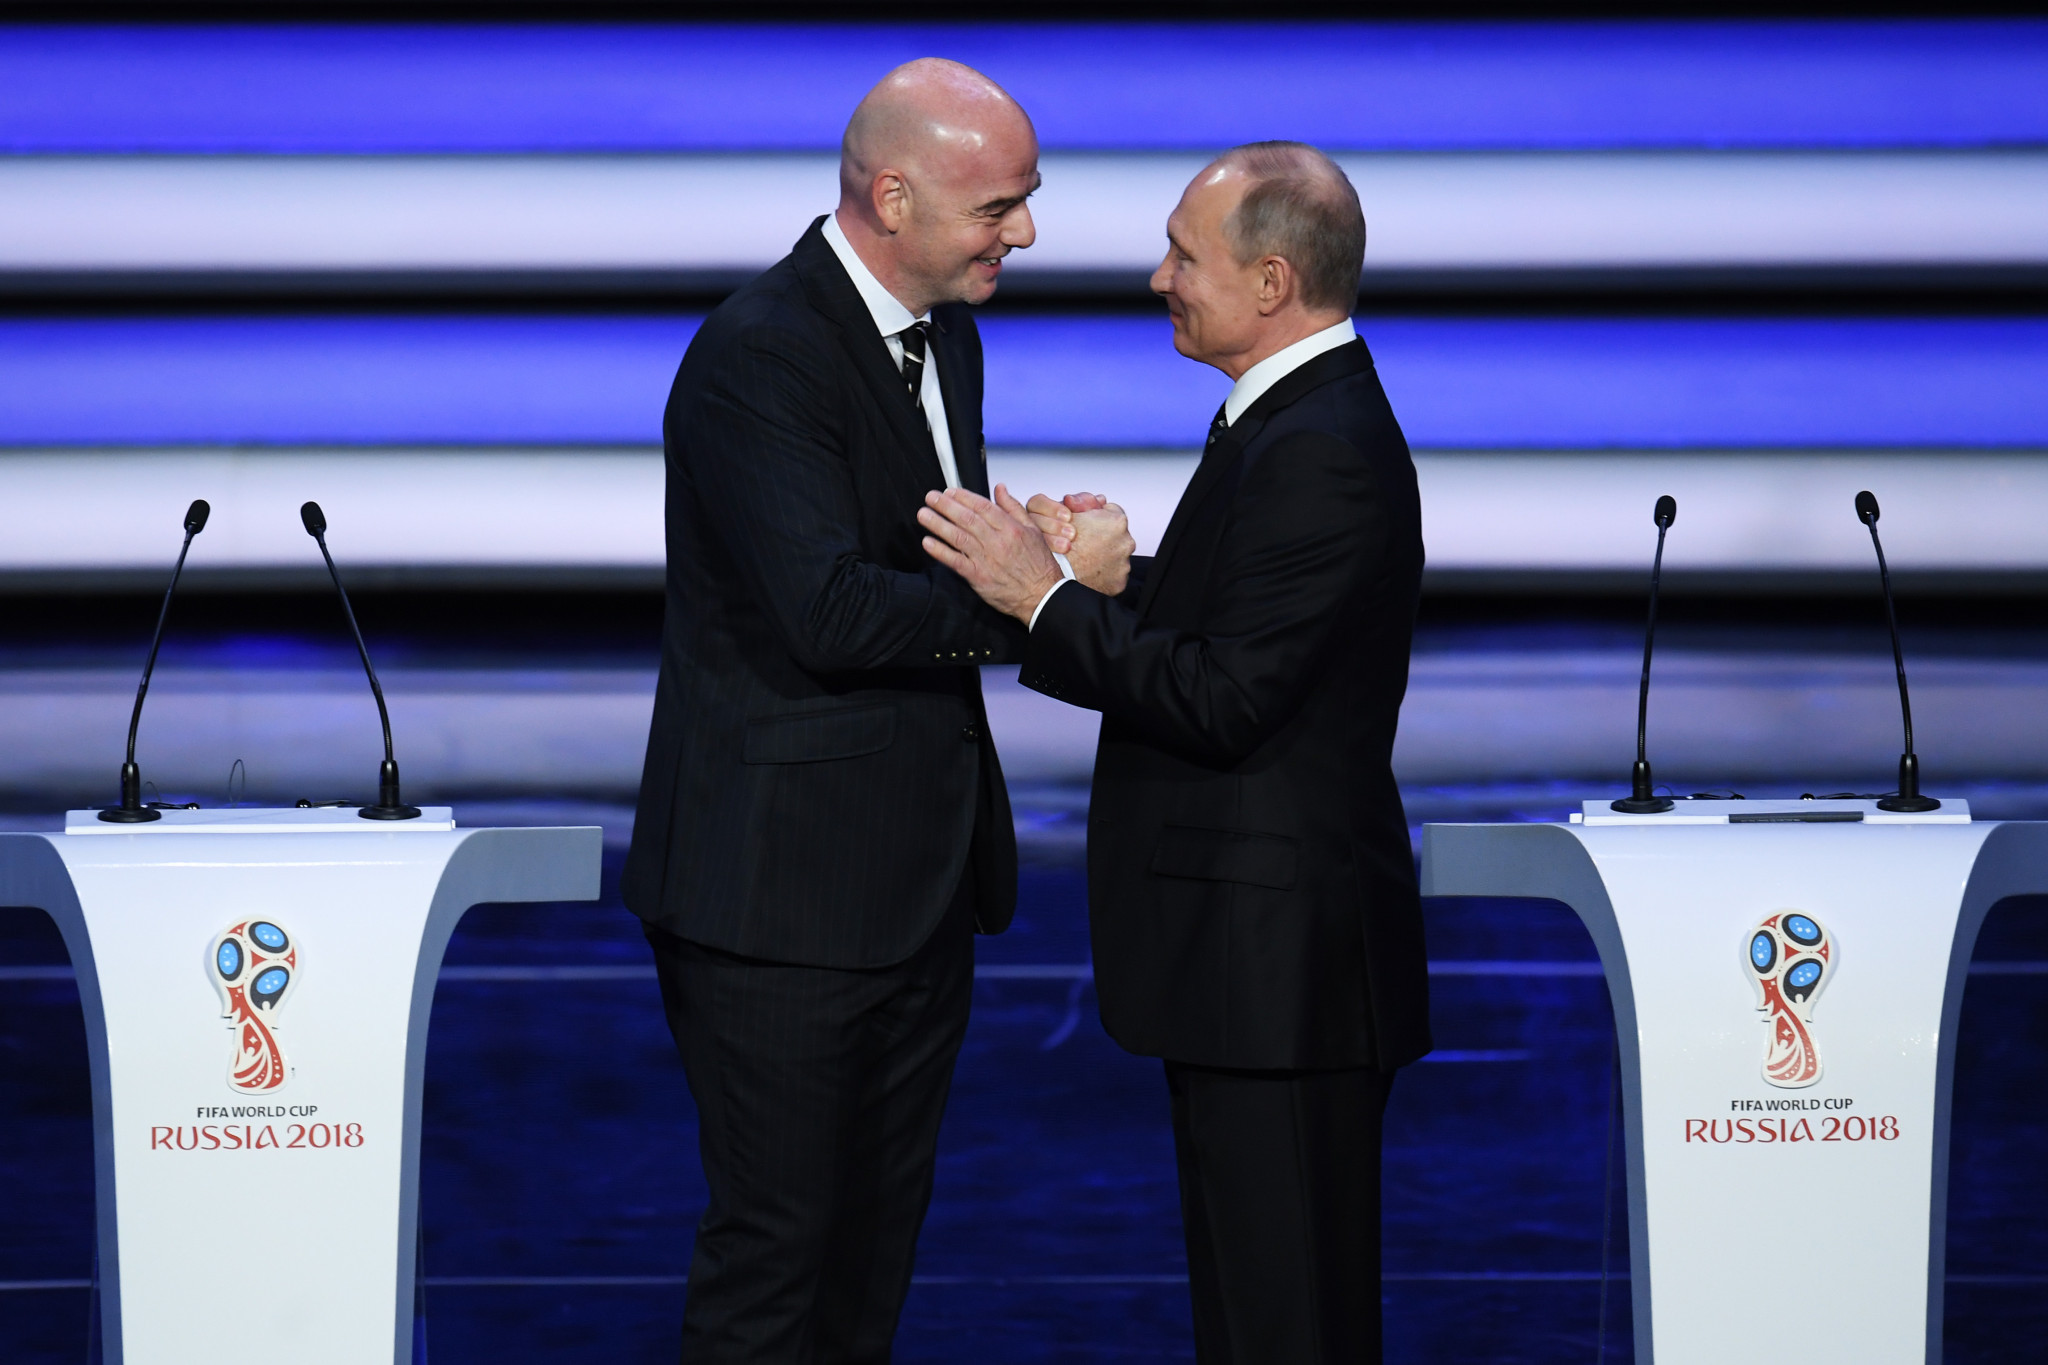 Vladimir Putin gave an opening address alongside FIFA President Gianni Infantino ©Getty Images